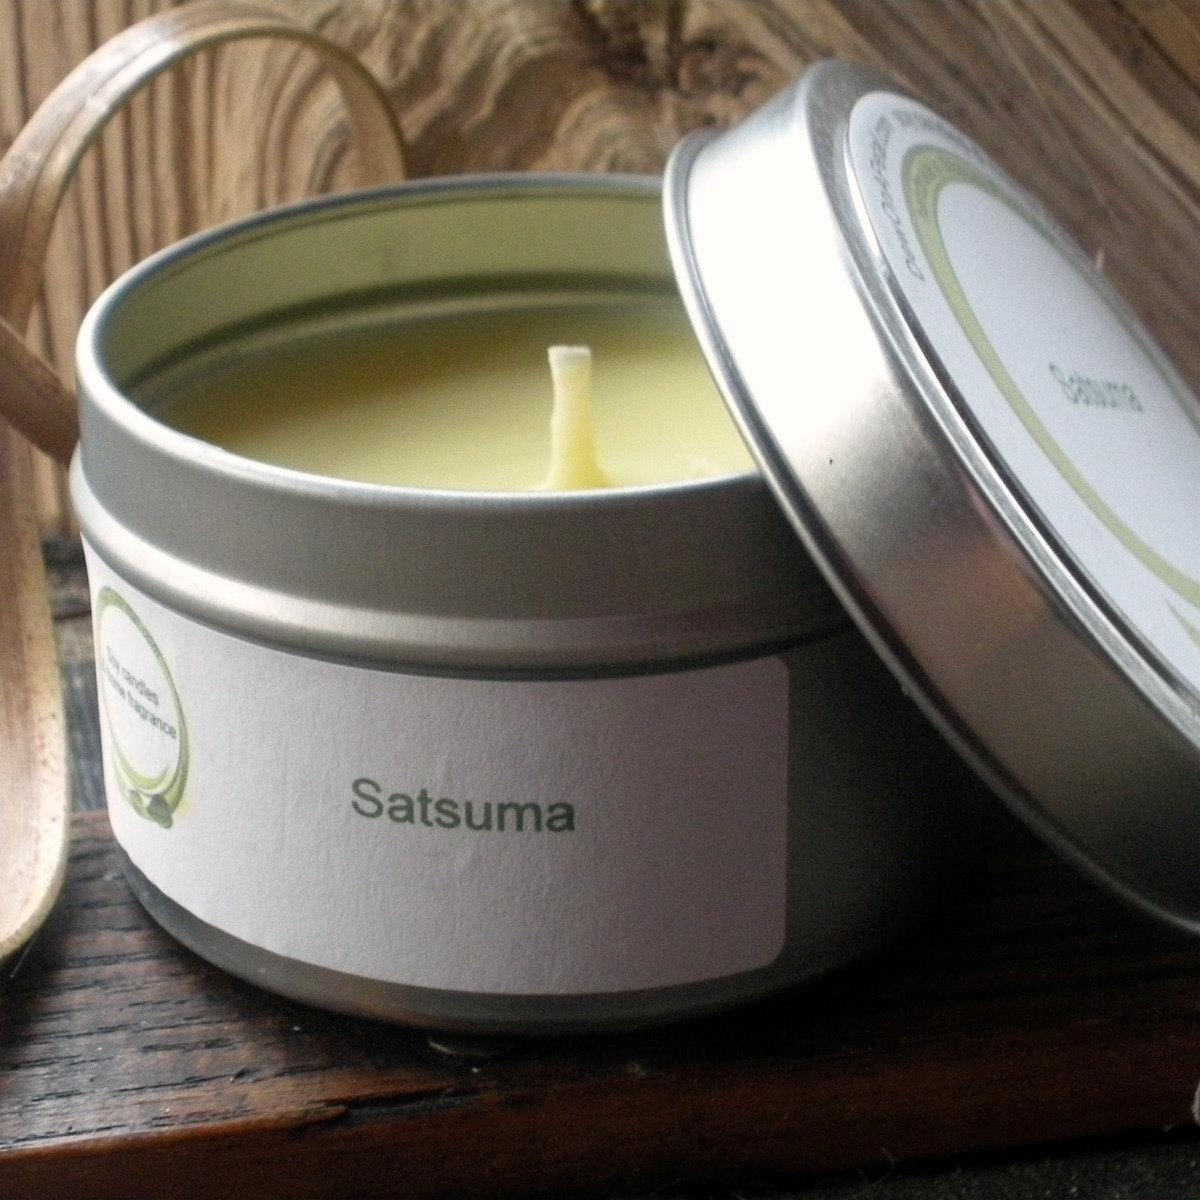 Satsuma (Body Shop Type) Soy Candle Travel Tin 6 oz - $8.00